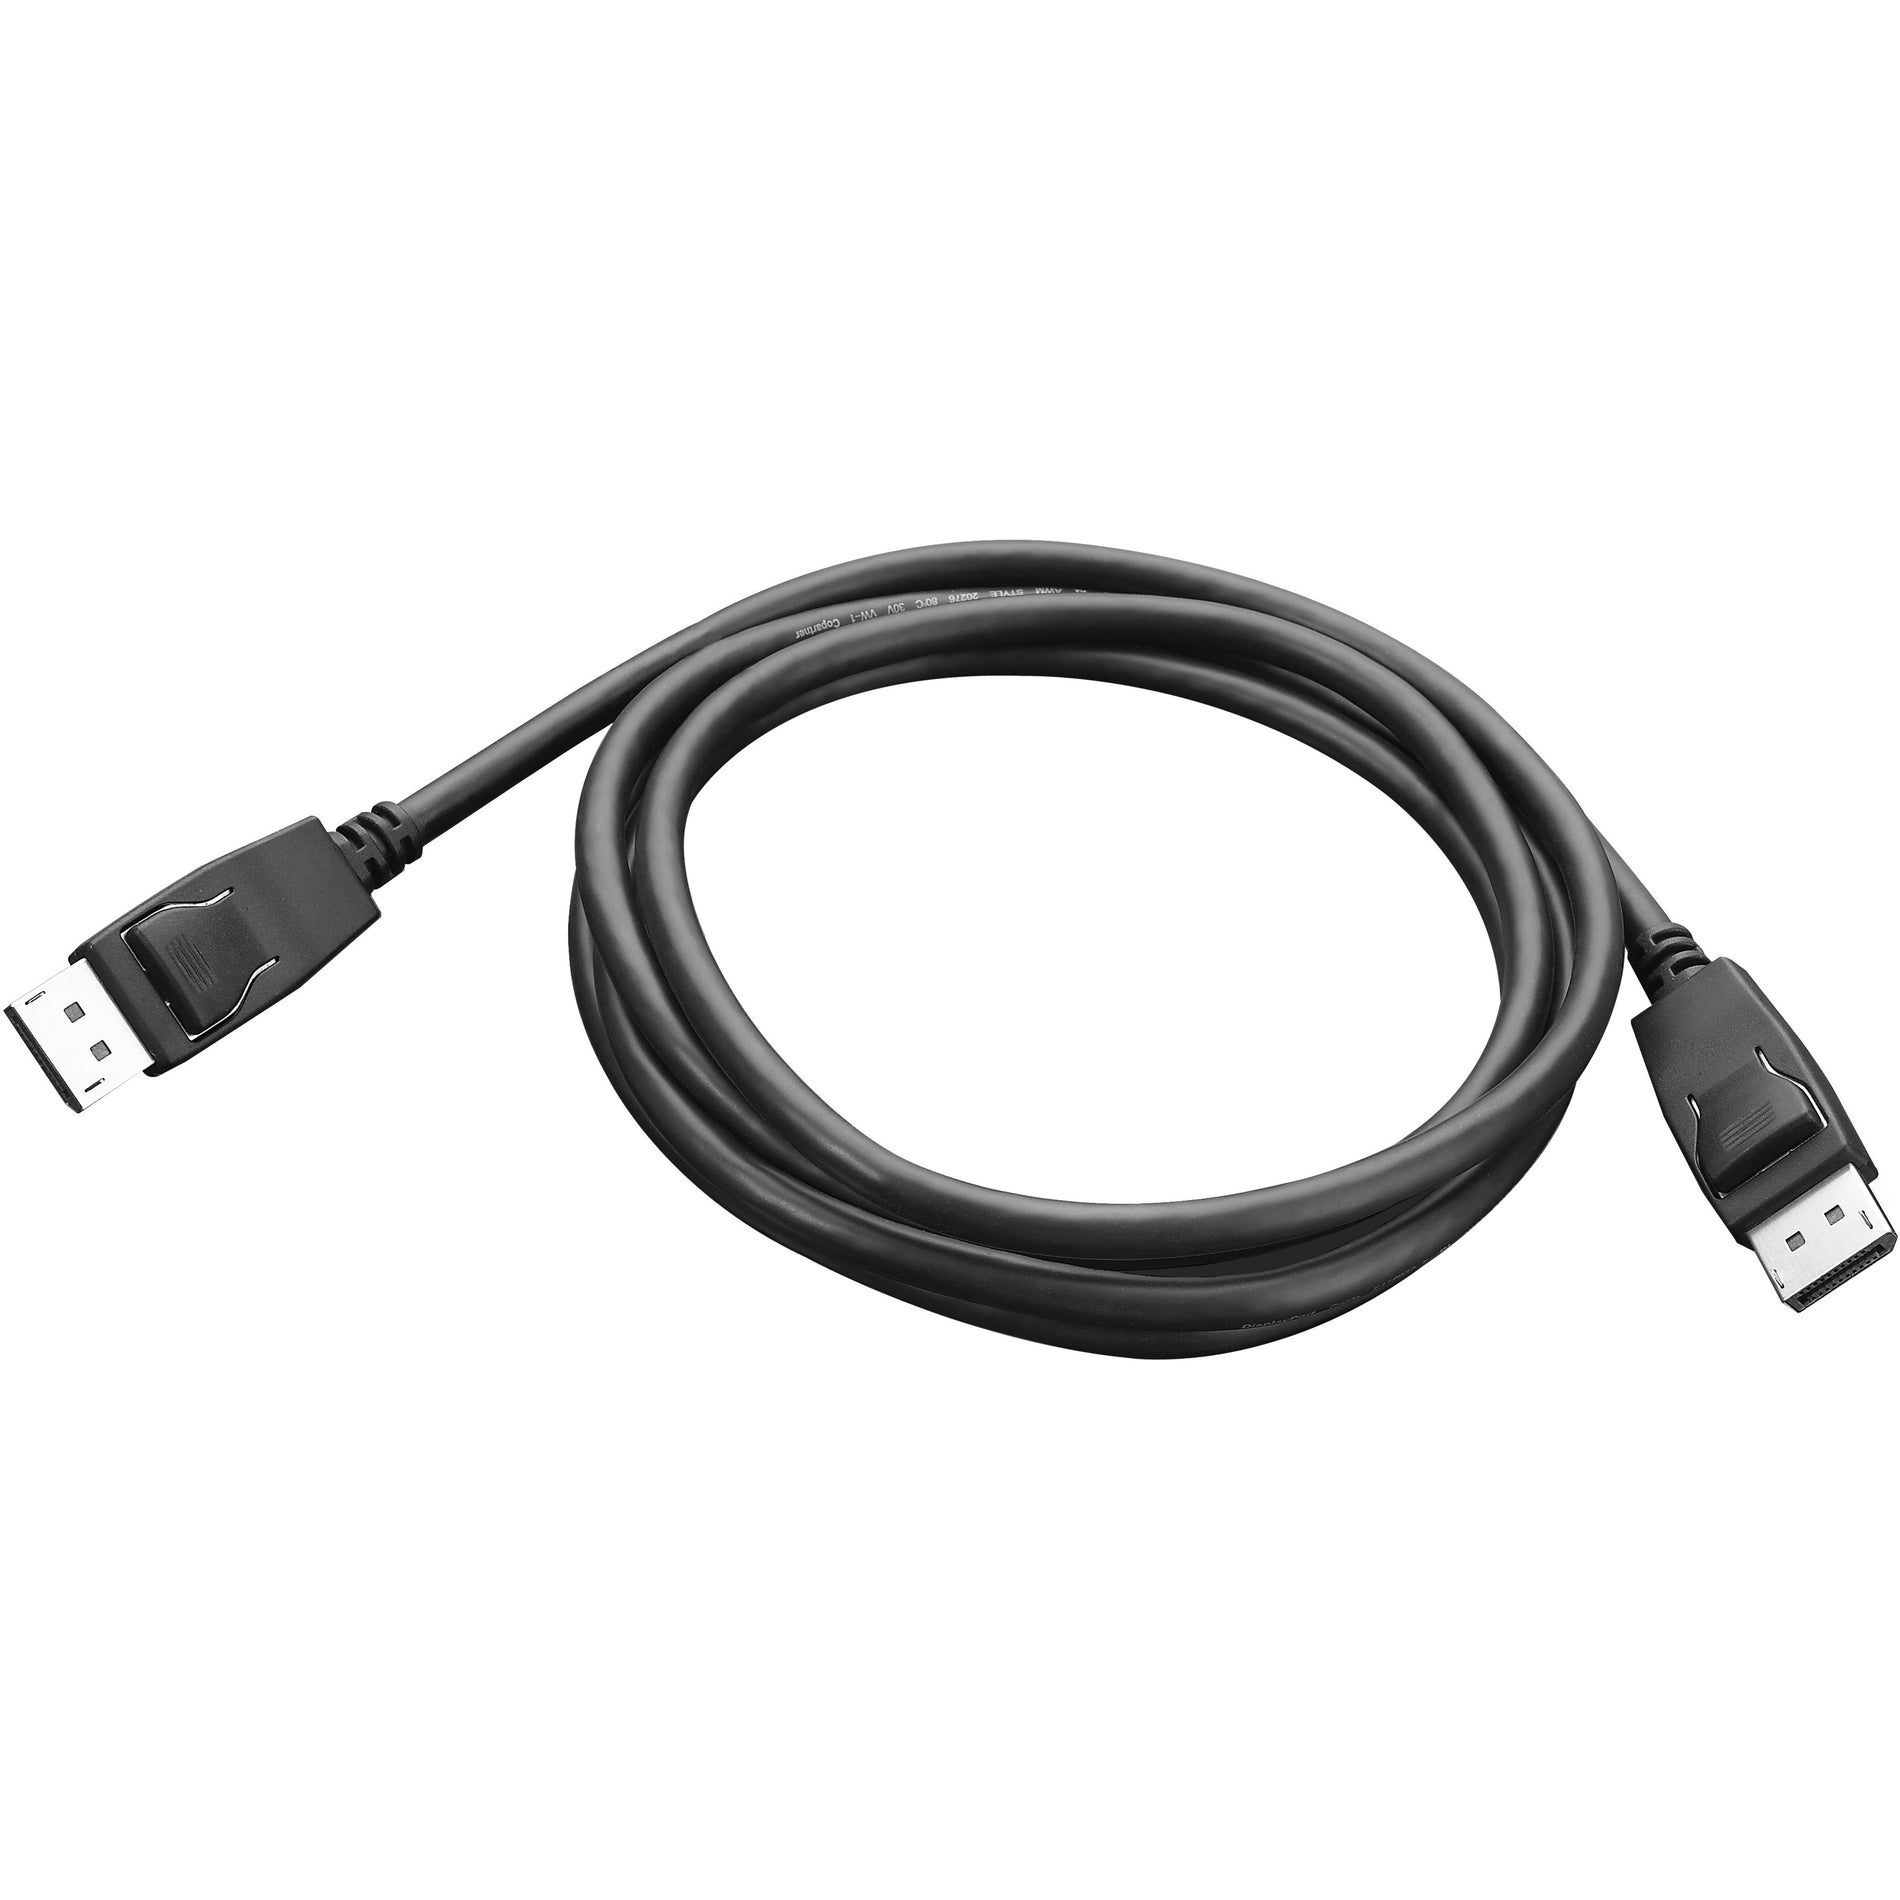 Lenovo 0A36537 DisplayPort Cable, 6 ft, Copper Conductor, Black